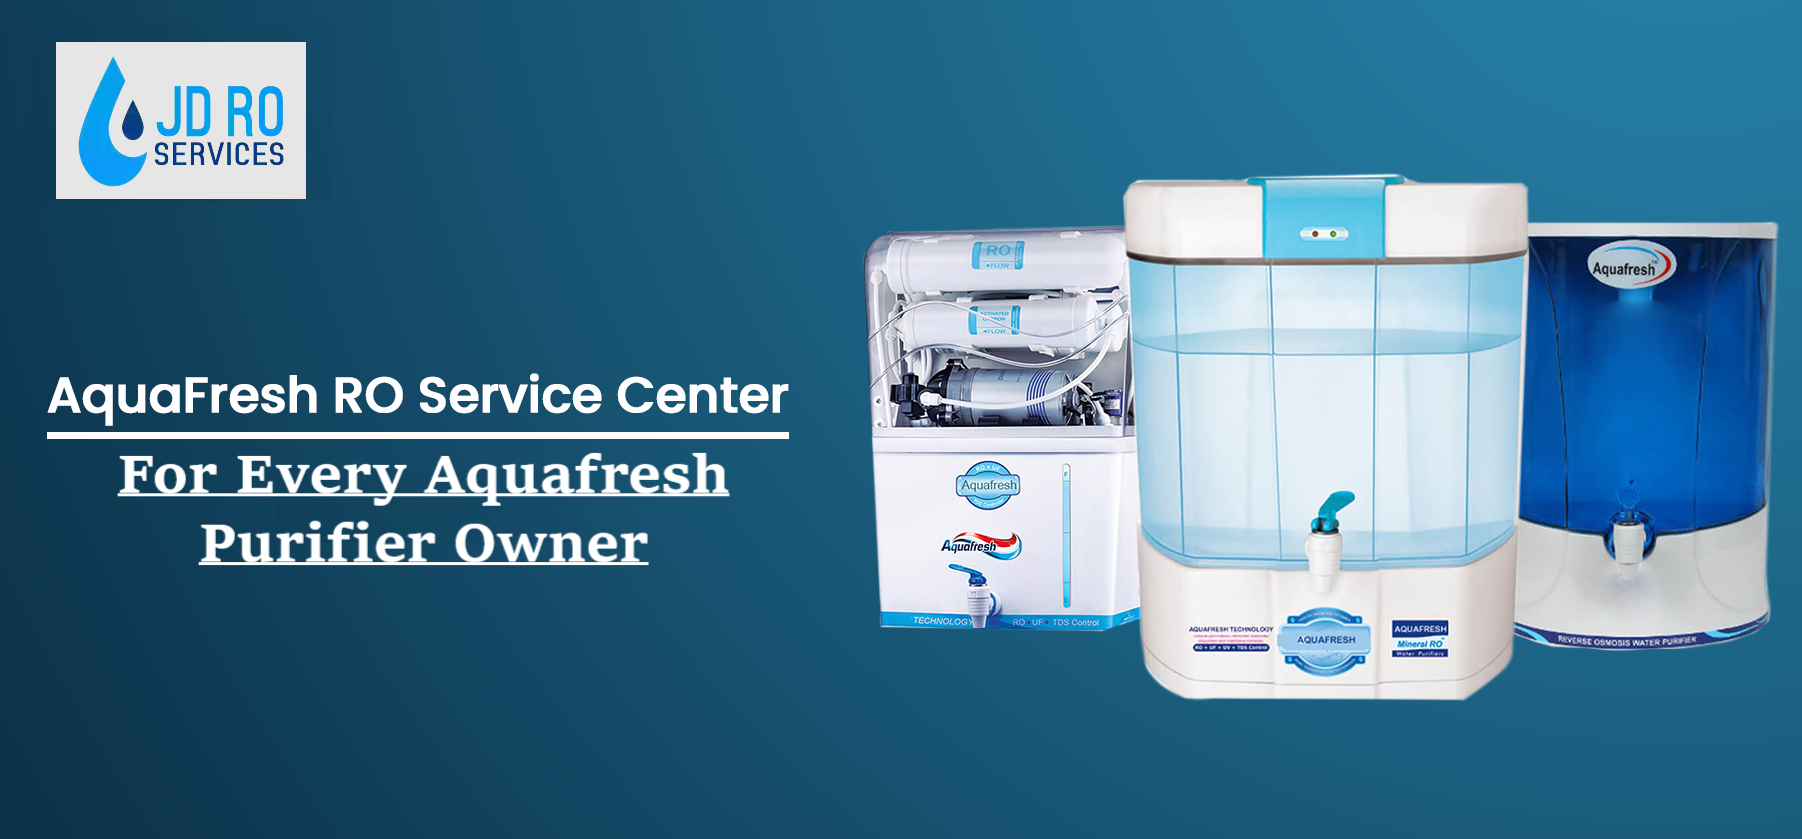 Aquafresh RO Service Center For Every Aquafresh Purifier Owner